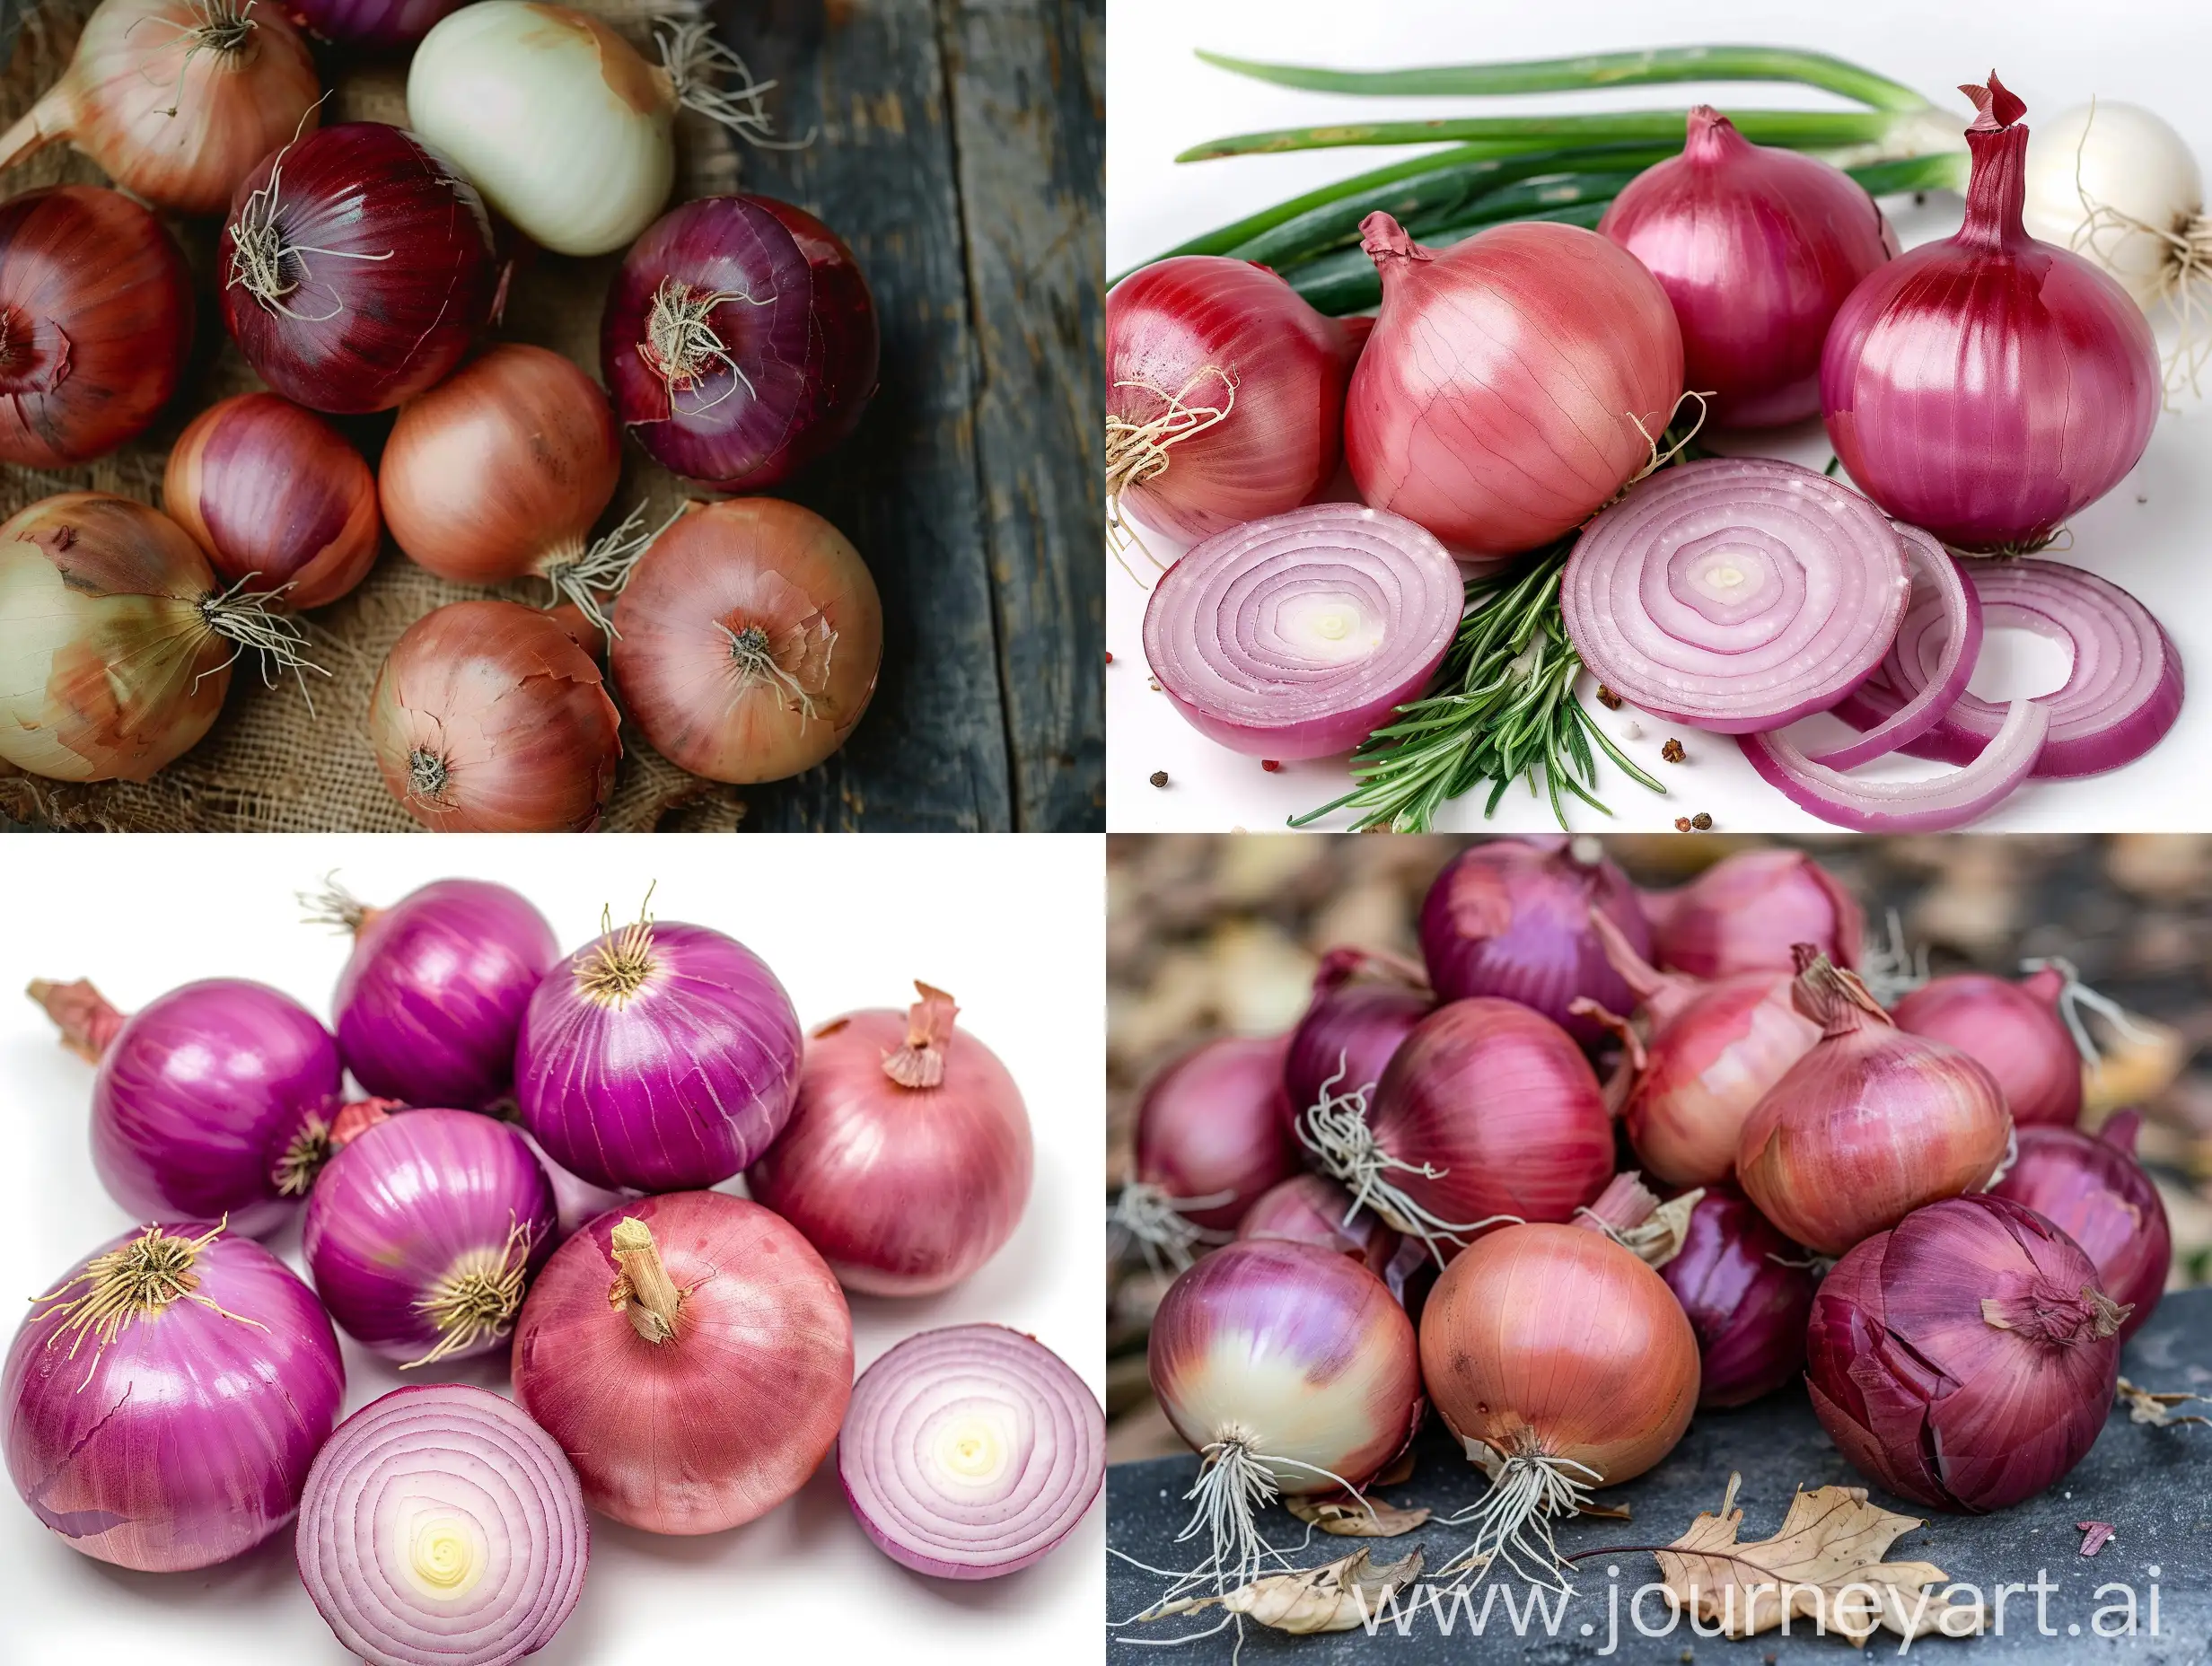 Vibrant-Onion-Display-Fresh-Produce-Market-Advertisement